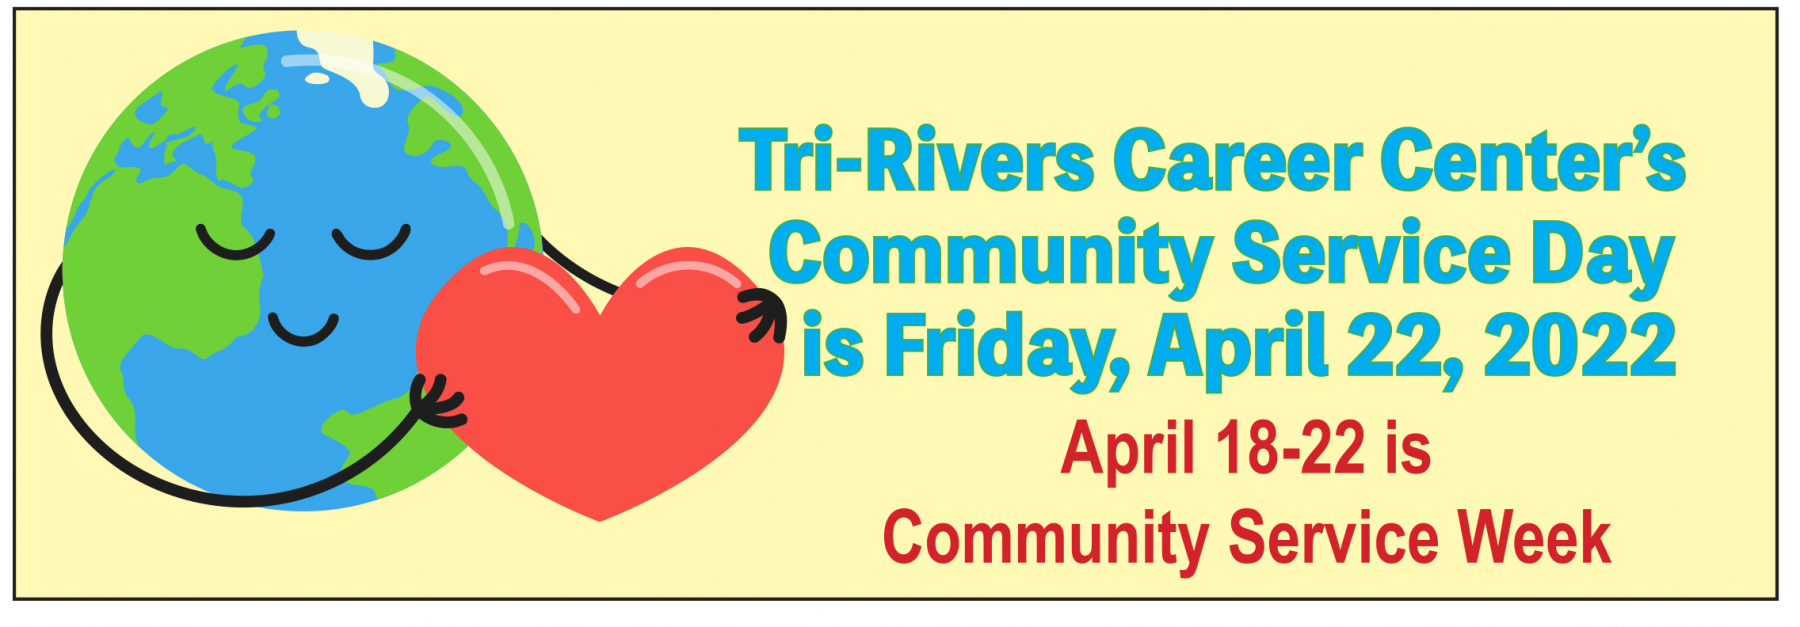 TriRivers Community Service Day, Friday, April 22 TriRivers Career